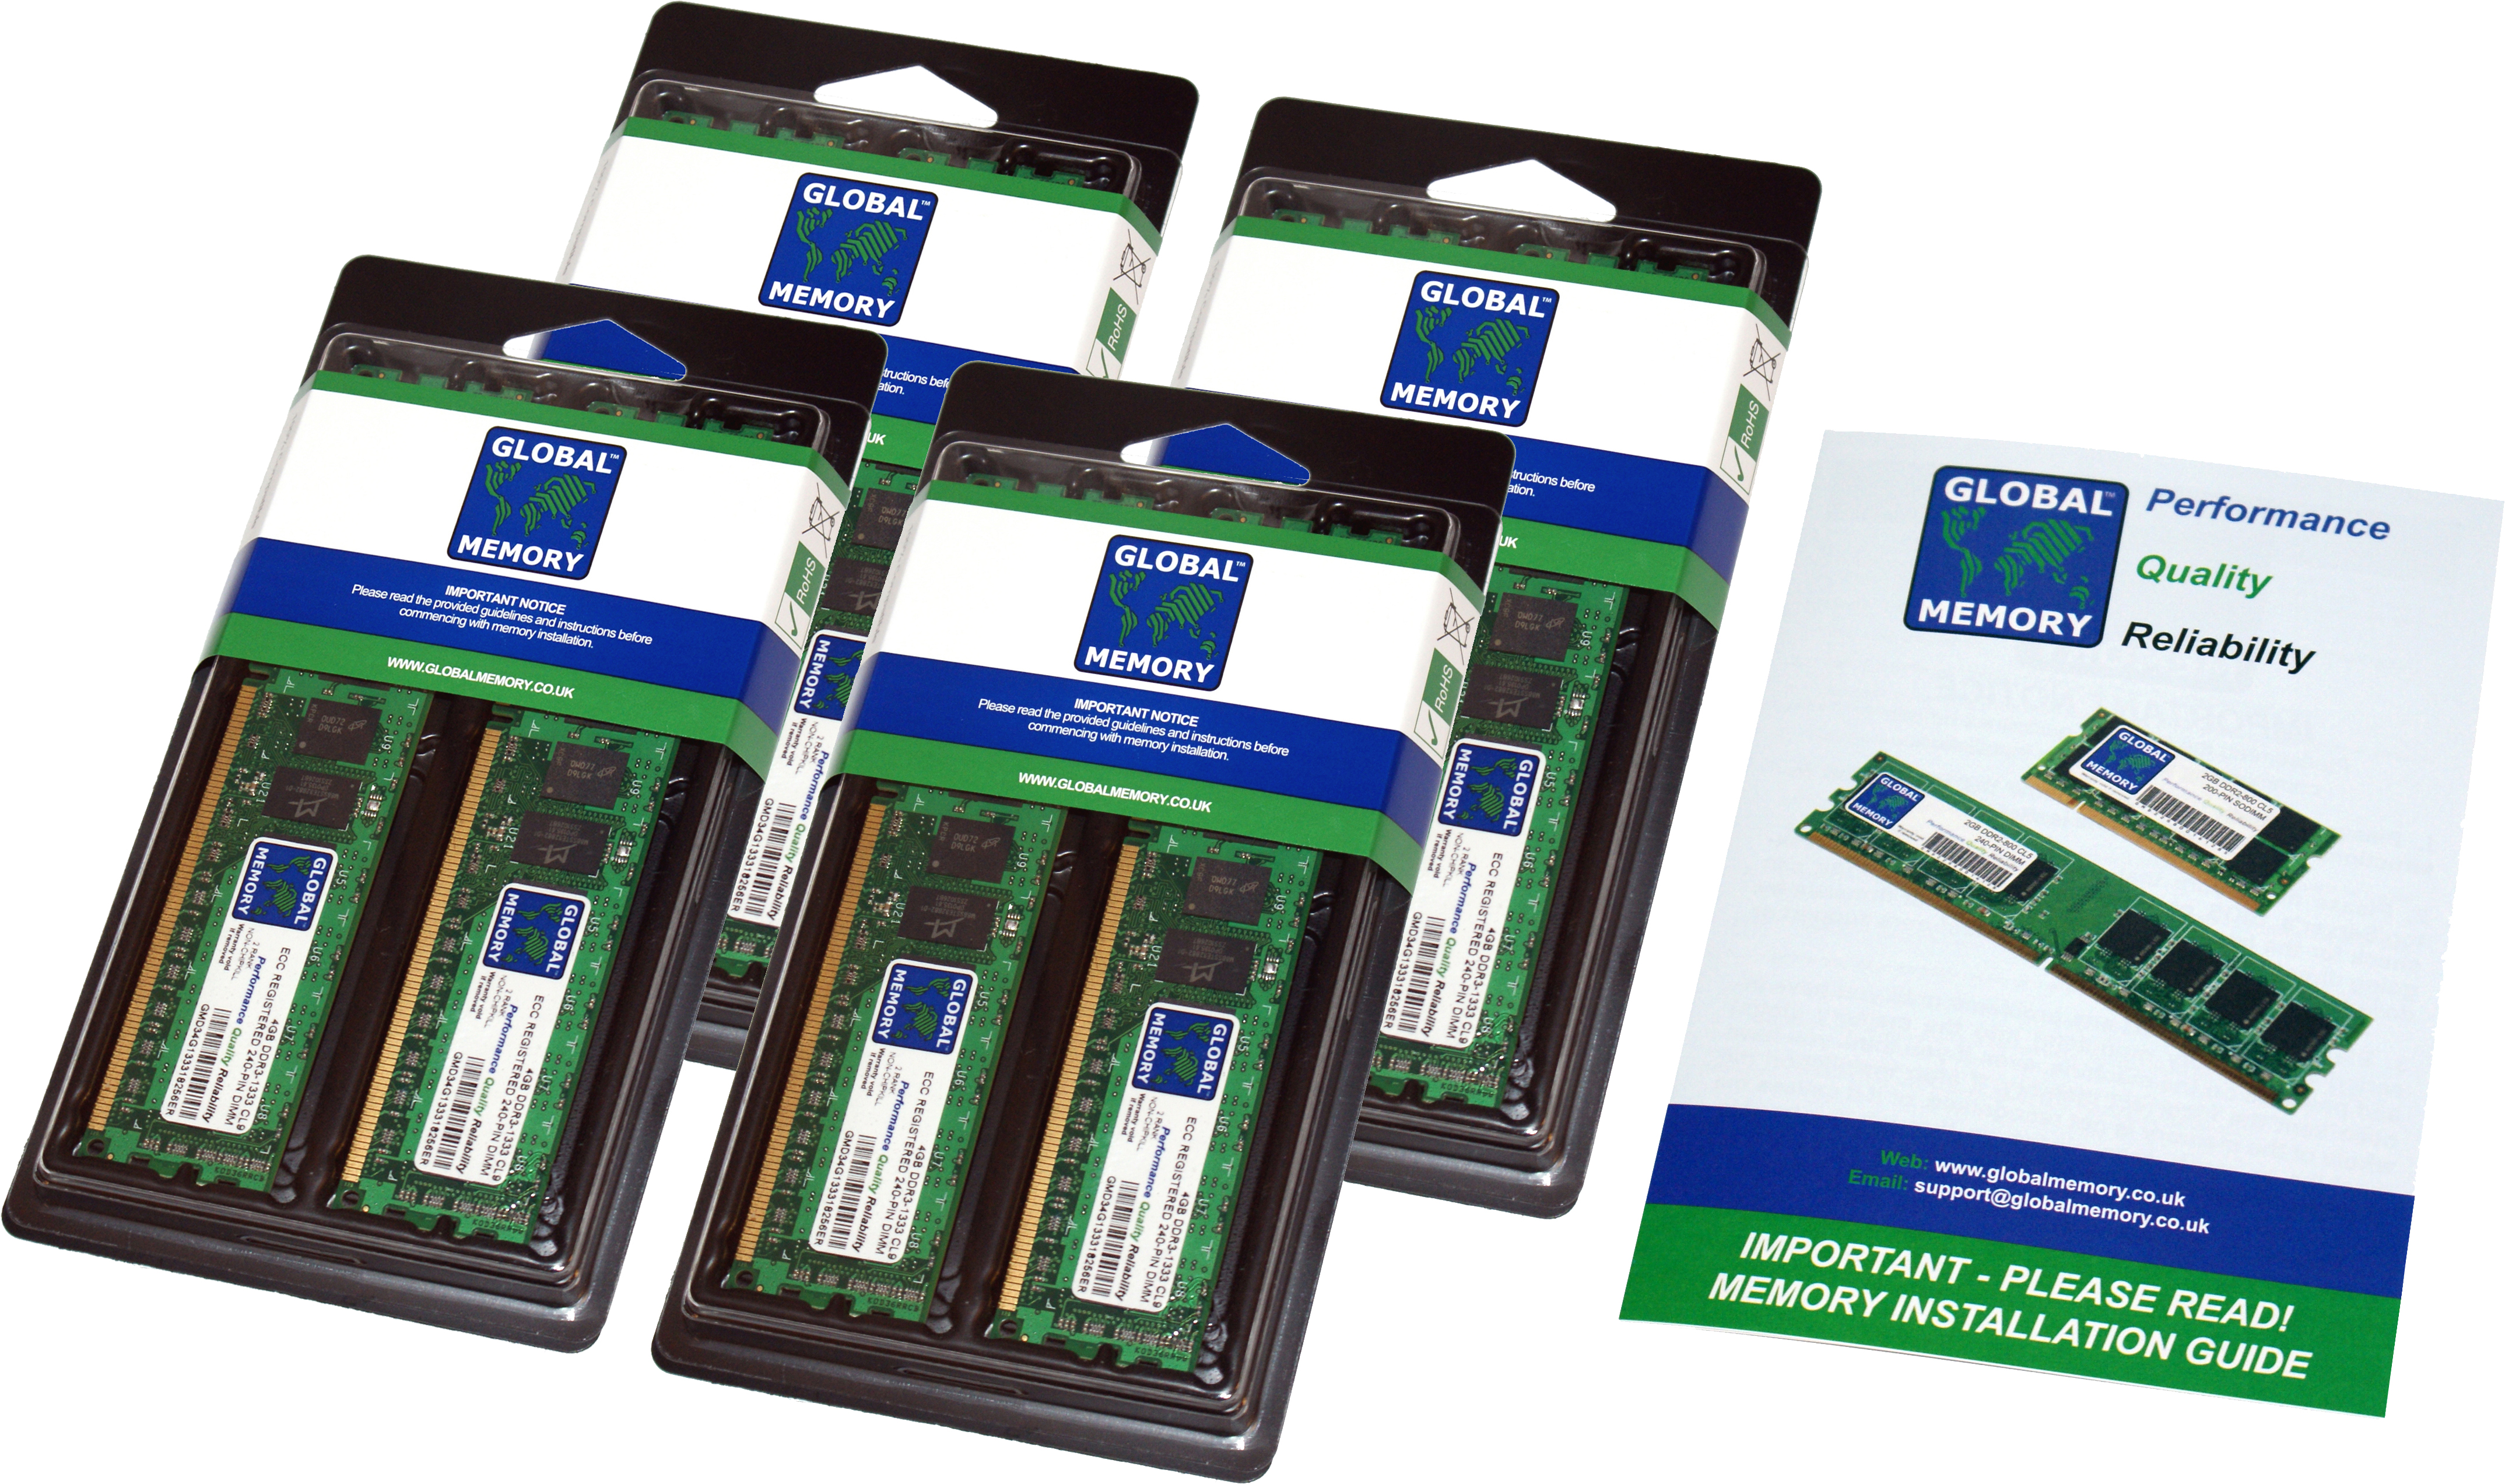 64GB (8 x 8GB) DDR4 2666MHz PC4-21300 288-PIN ECC REGISTERED DIMM (RDIMM) MEMORY RAM KIT FOR APPLE MAC PRO (2019)